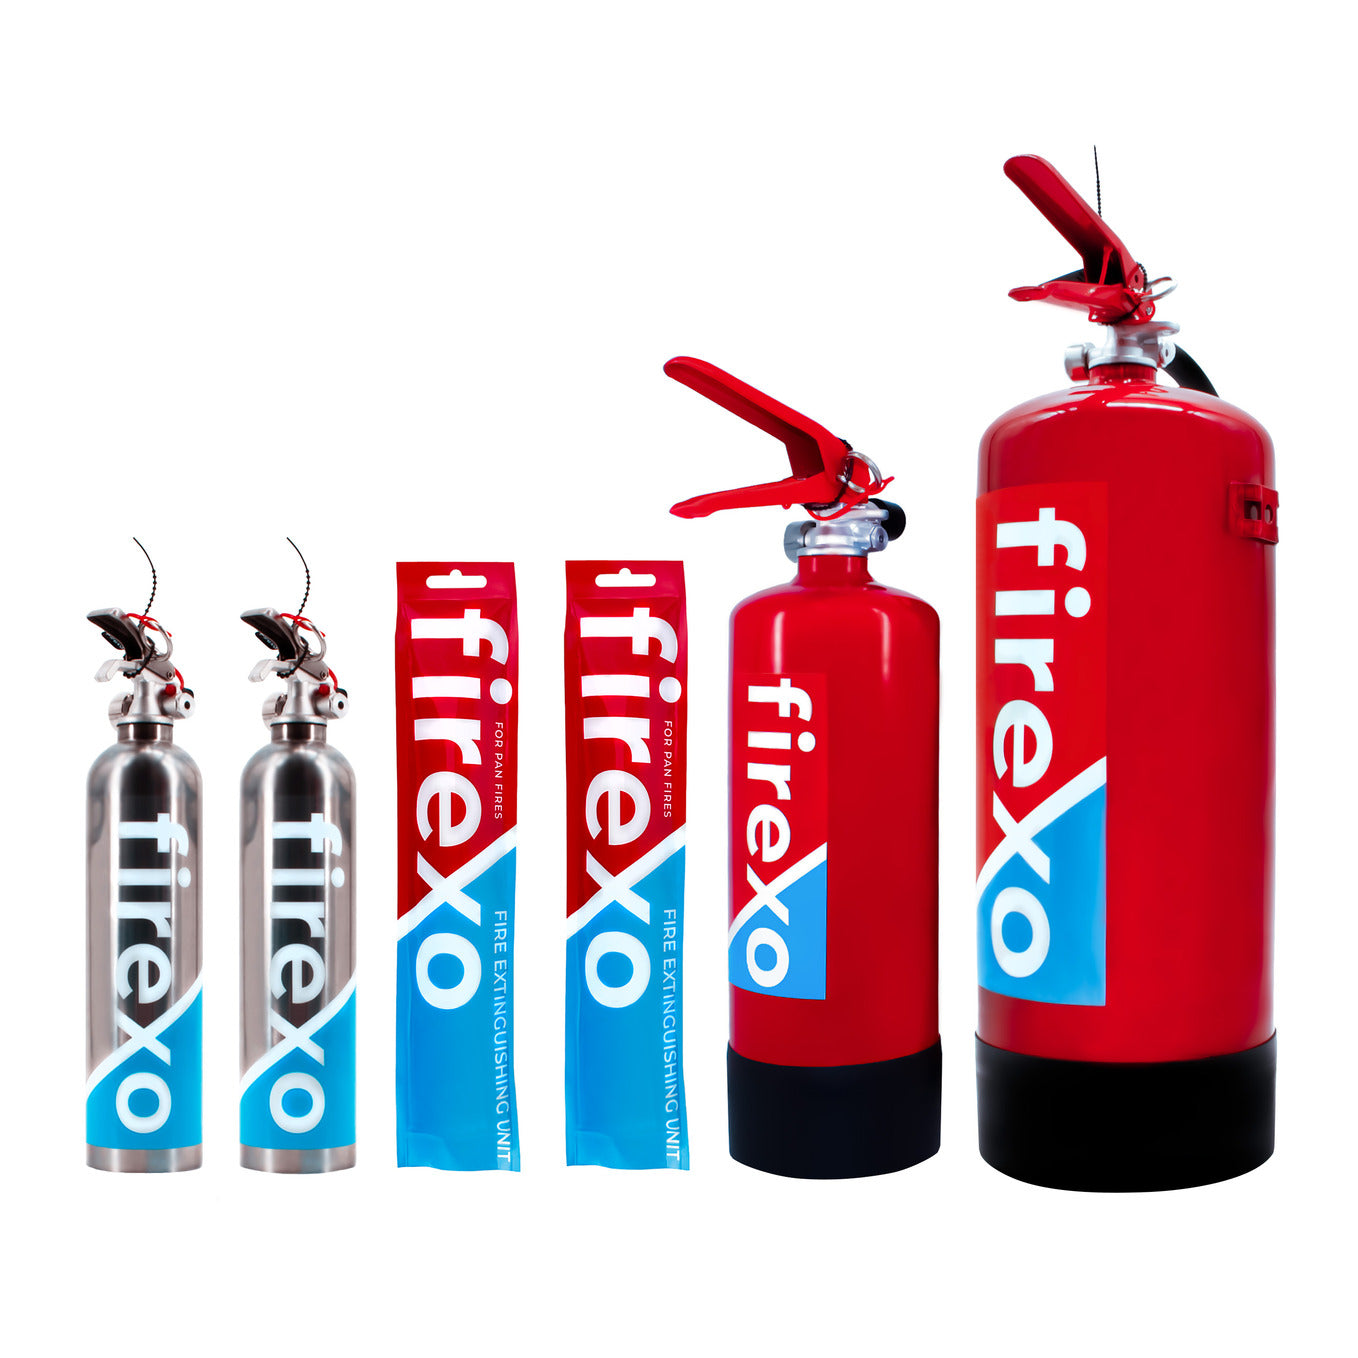 Firexo Restaurant ALL FIRES Fire Extinguisher Bundle (6 Items)